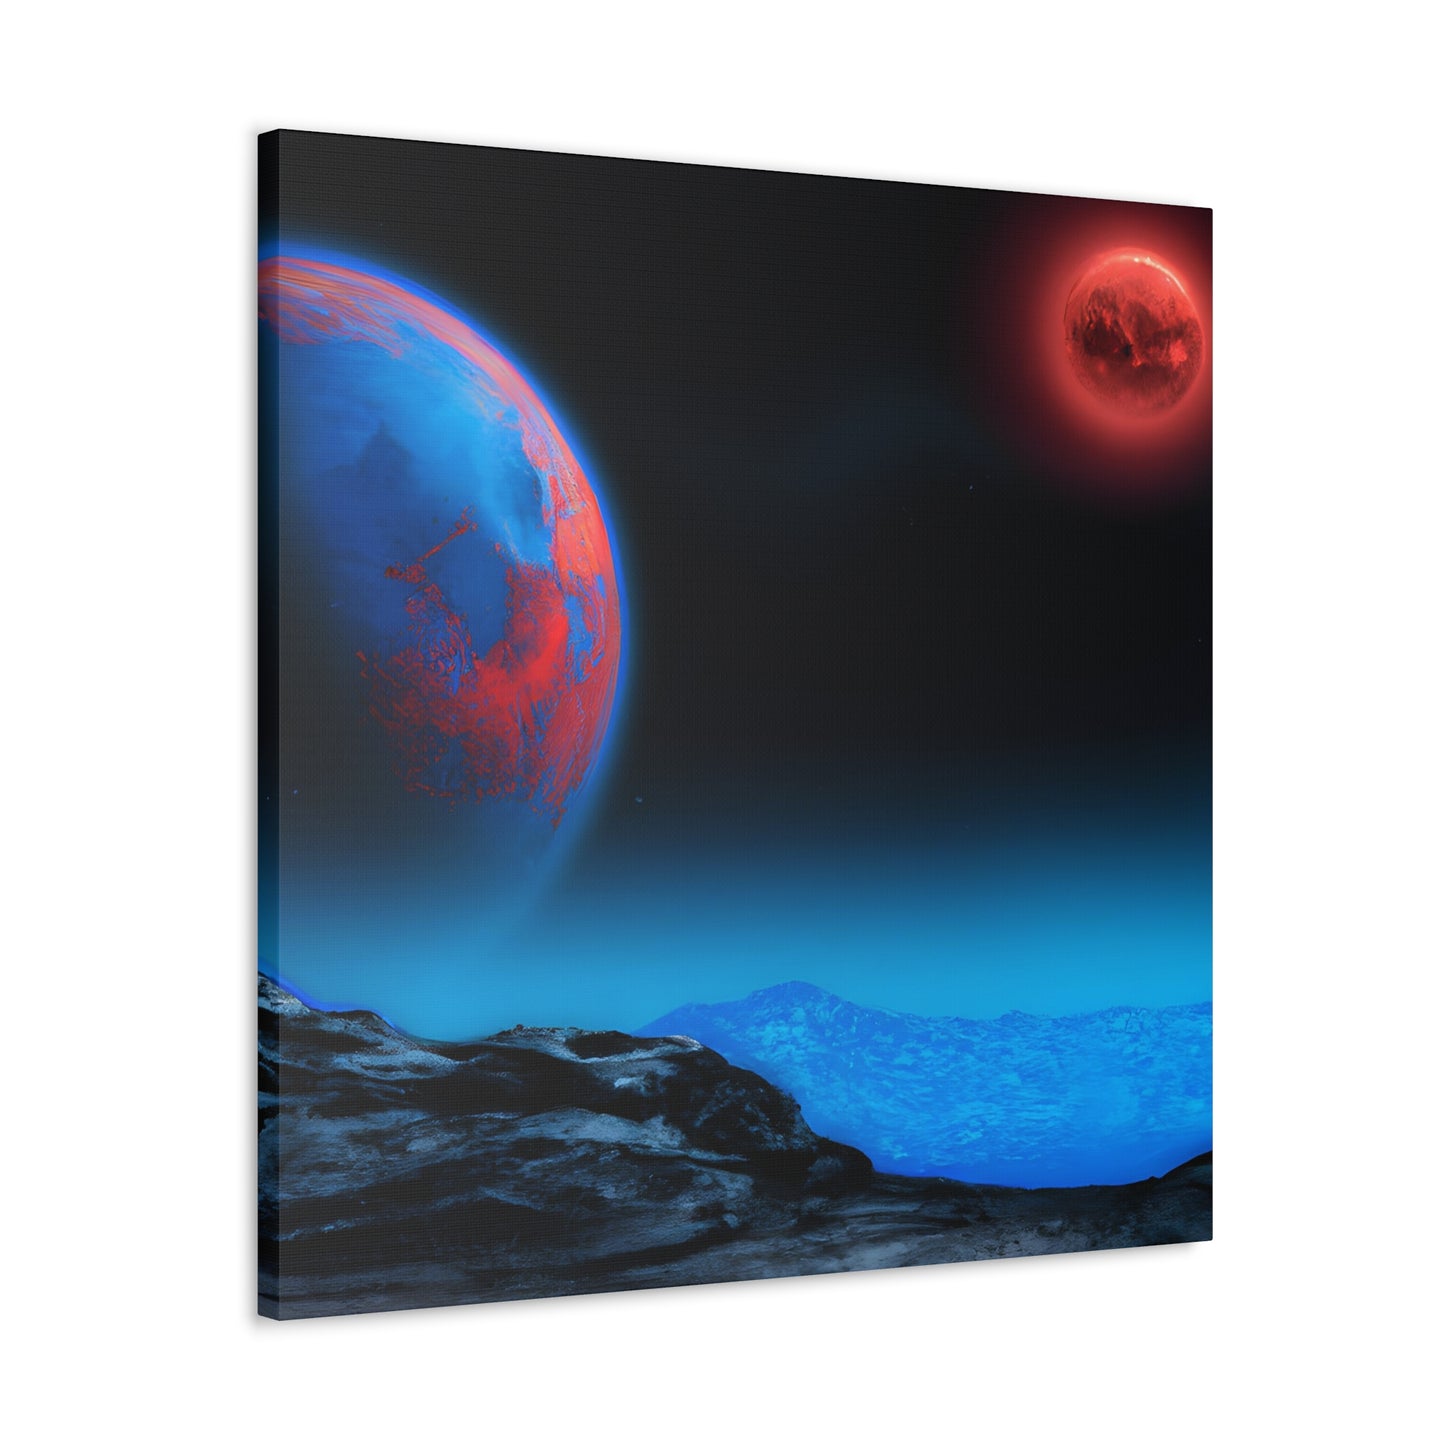 Space Spinner - Digital Art Canvas